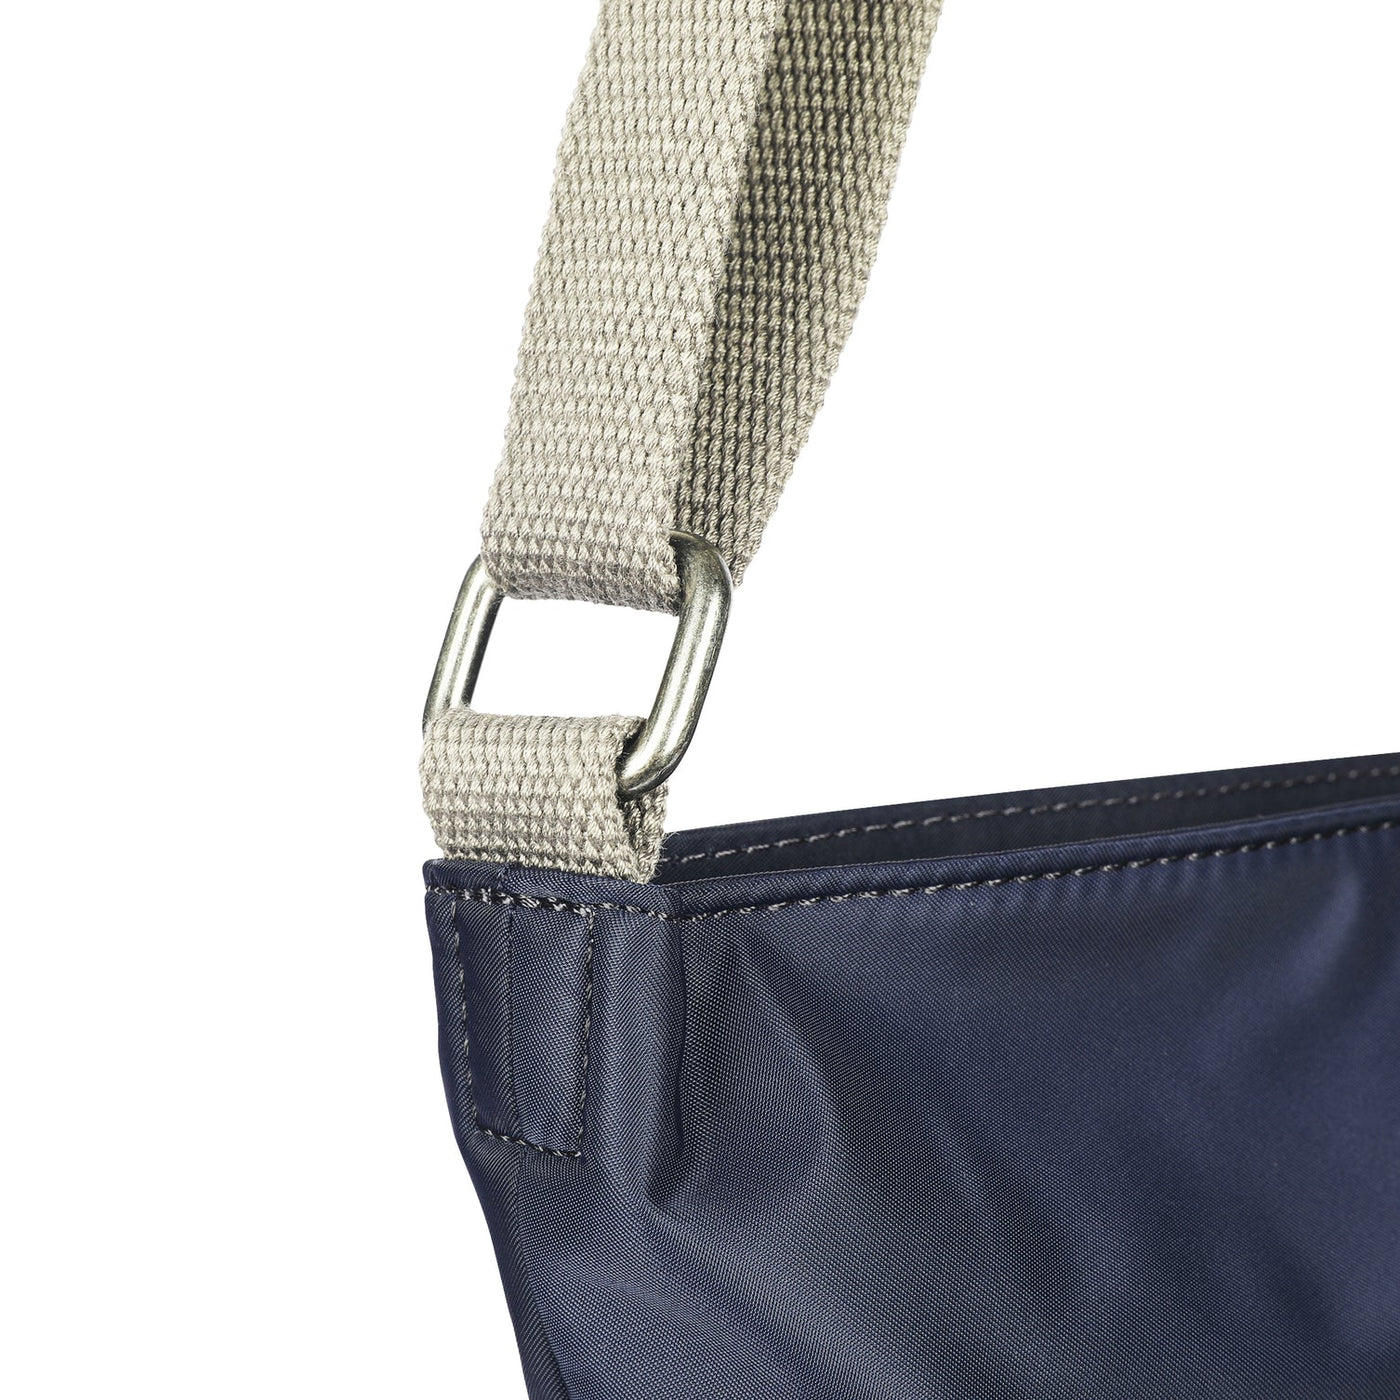 Roka Kennington B Medium Crossbody Bag -Sustainable Nylon - Midnight